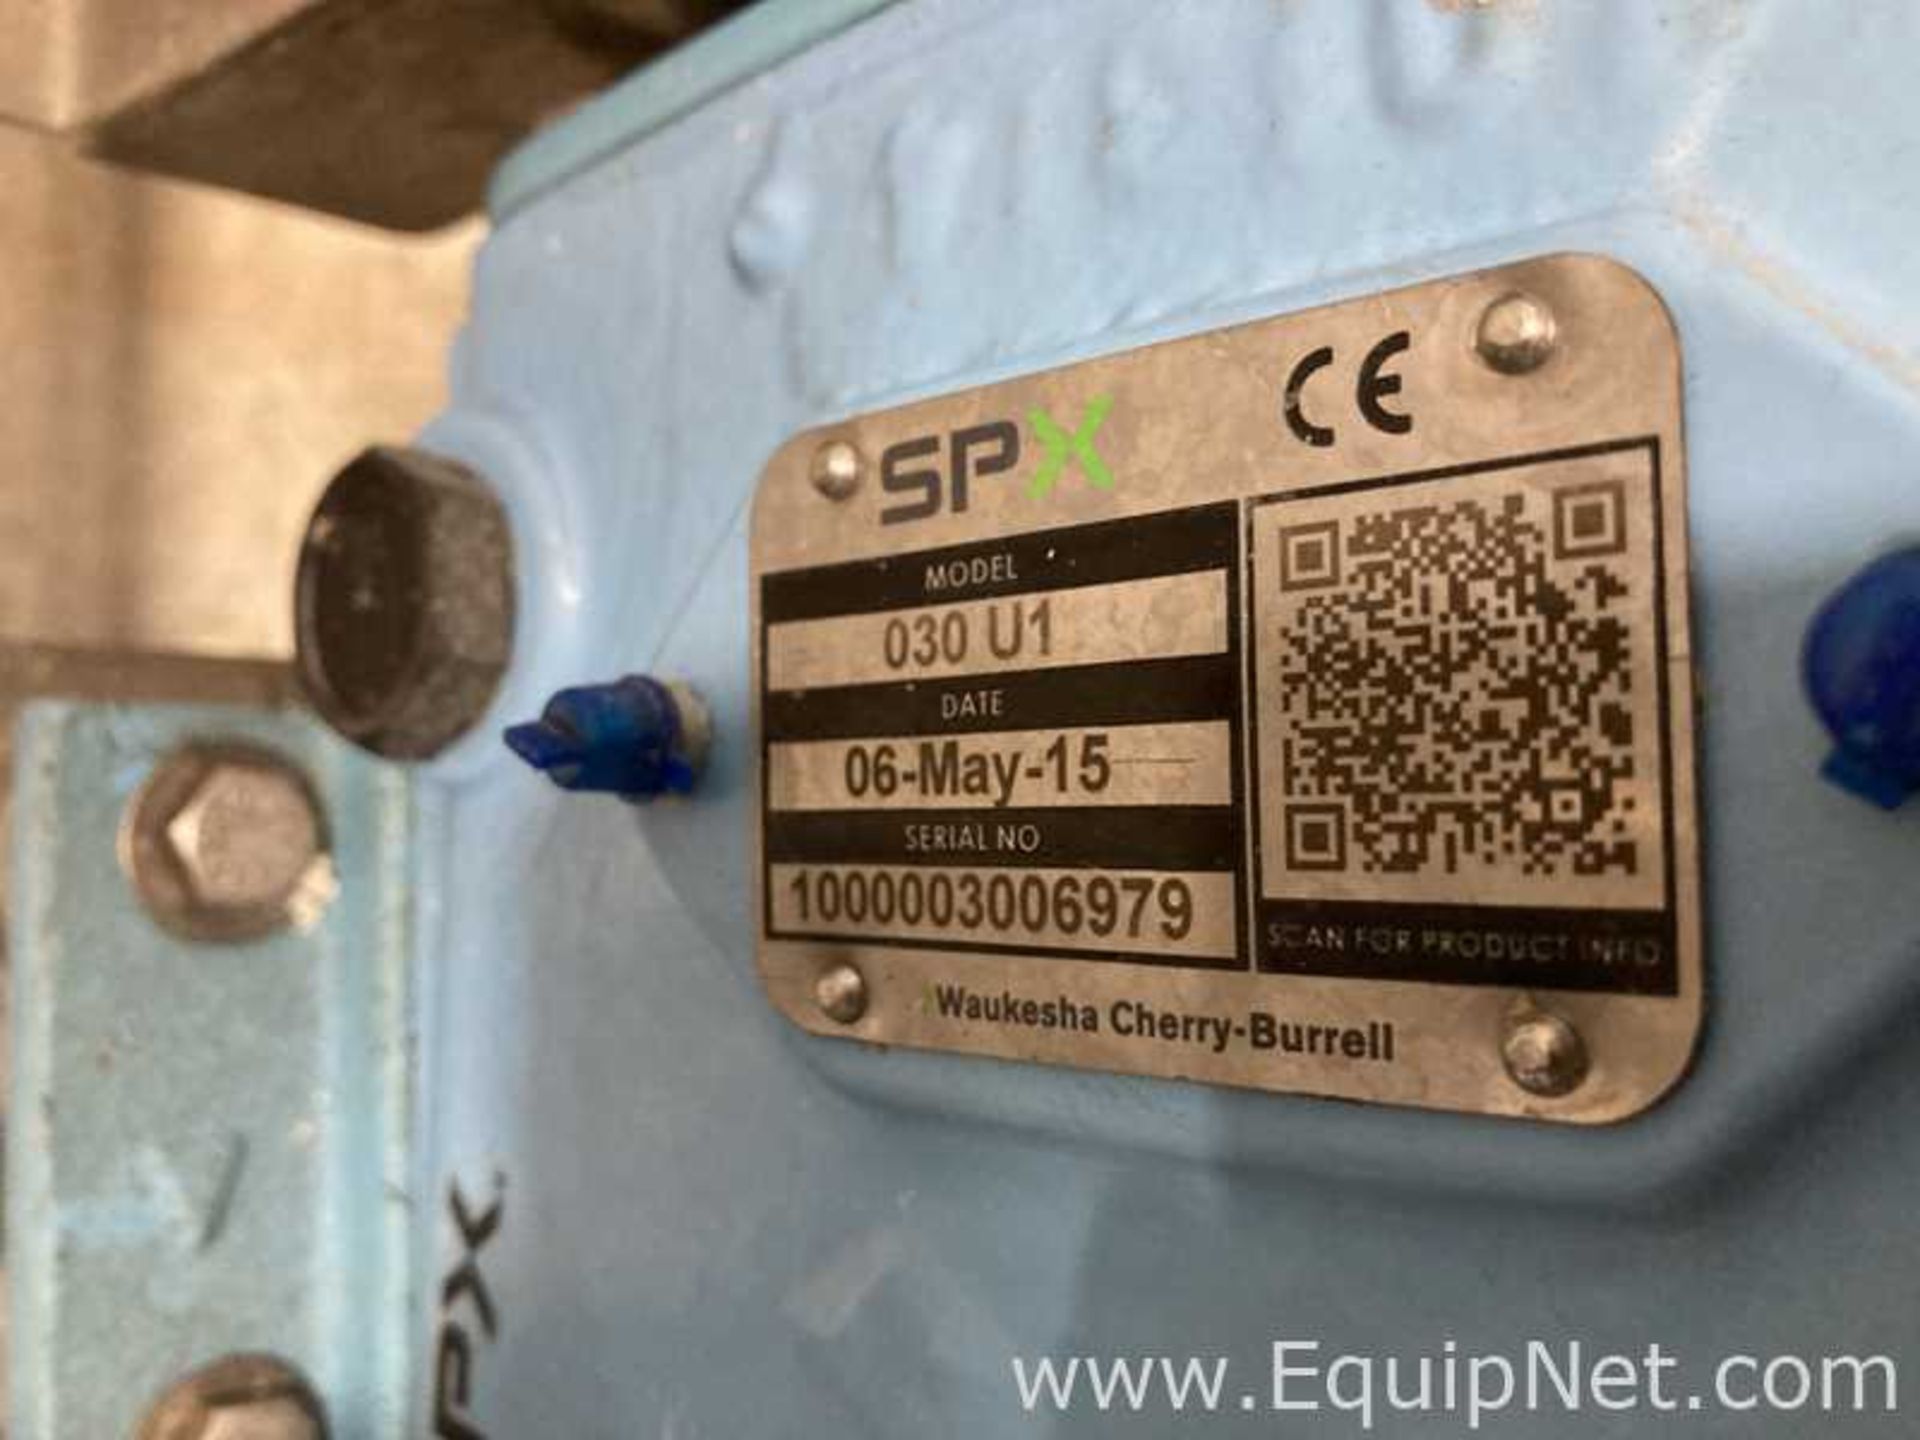 SPX Flow Technology 030 U1 Lobe Pump - Image 5 of 10